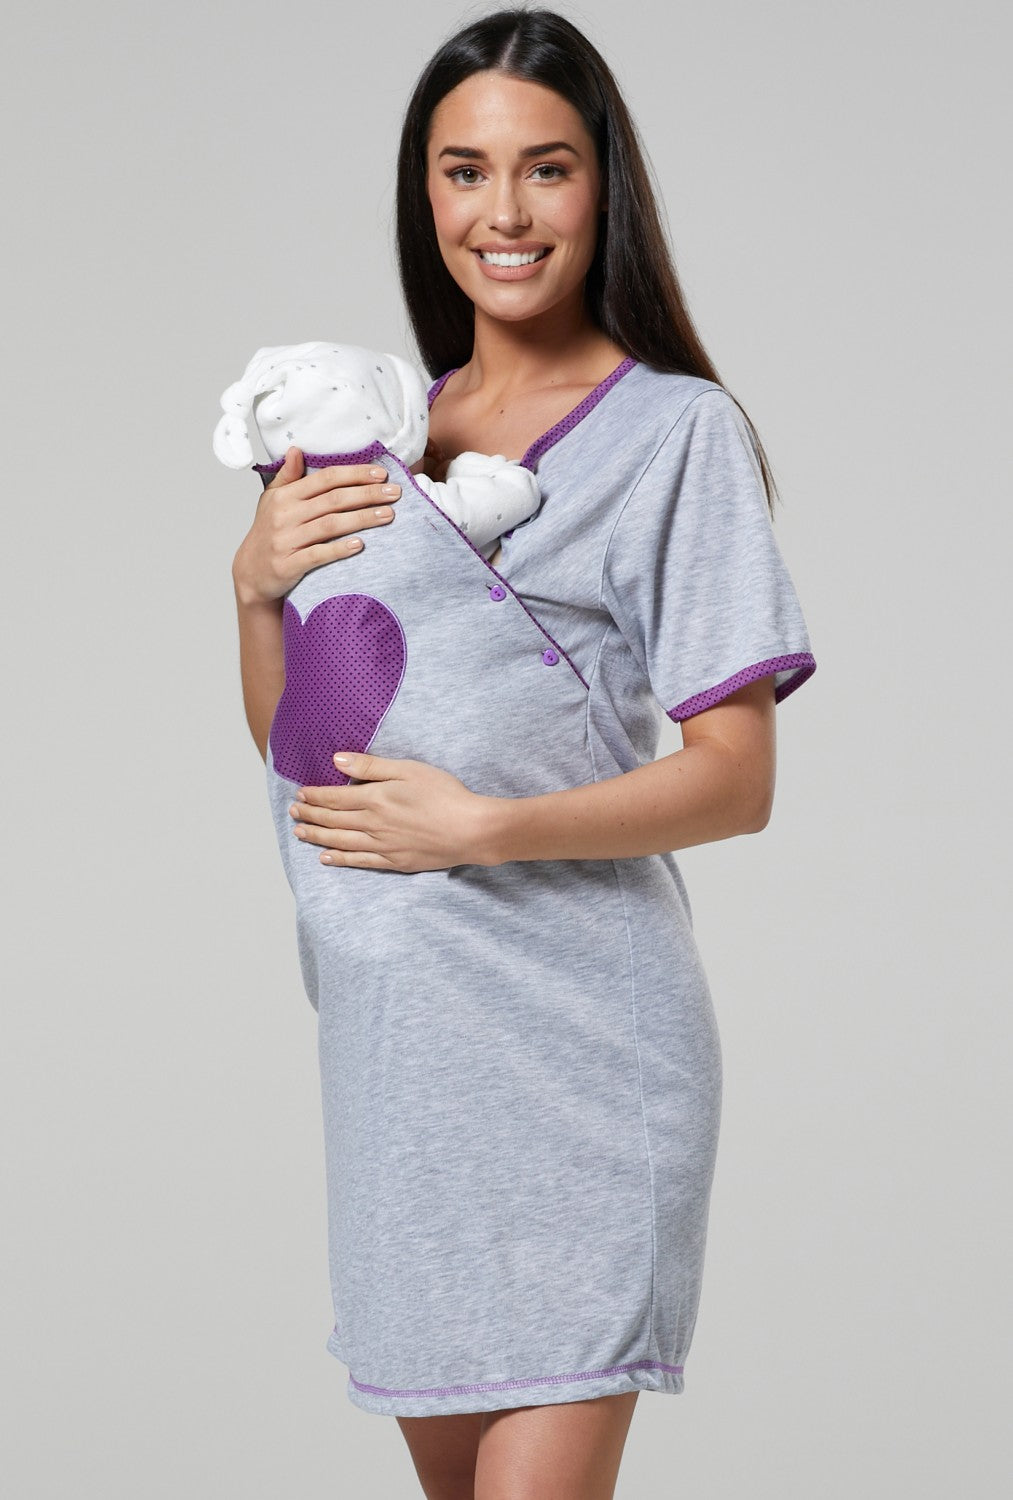 GEORGE ASDA 16-18 Maternity Breast Feeding Nursing Nightie £7.50 - PicClick  UK